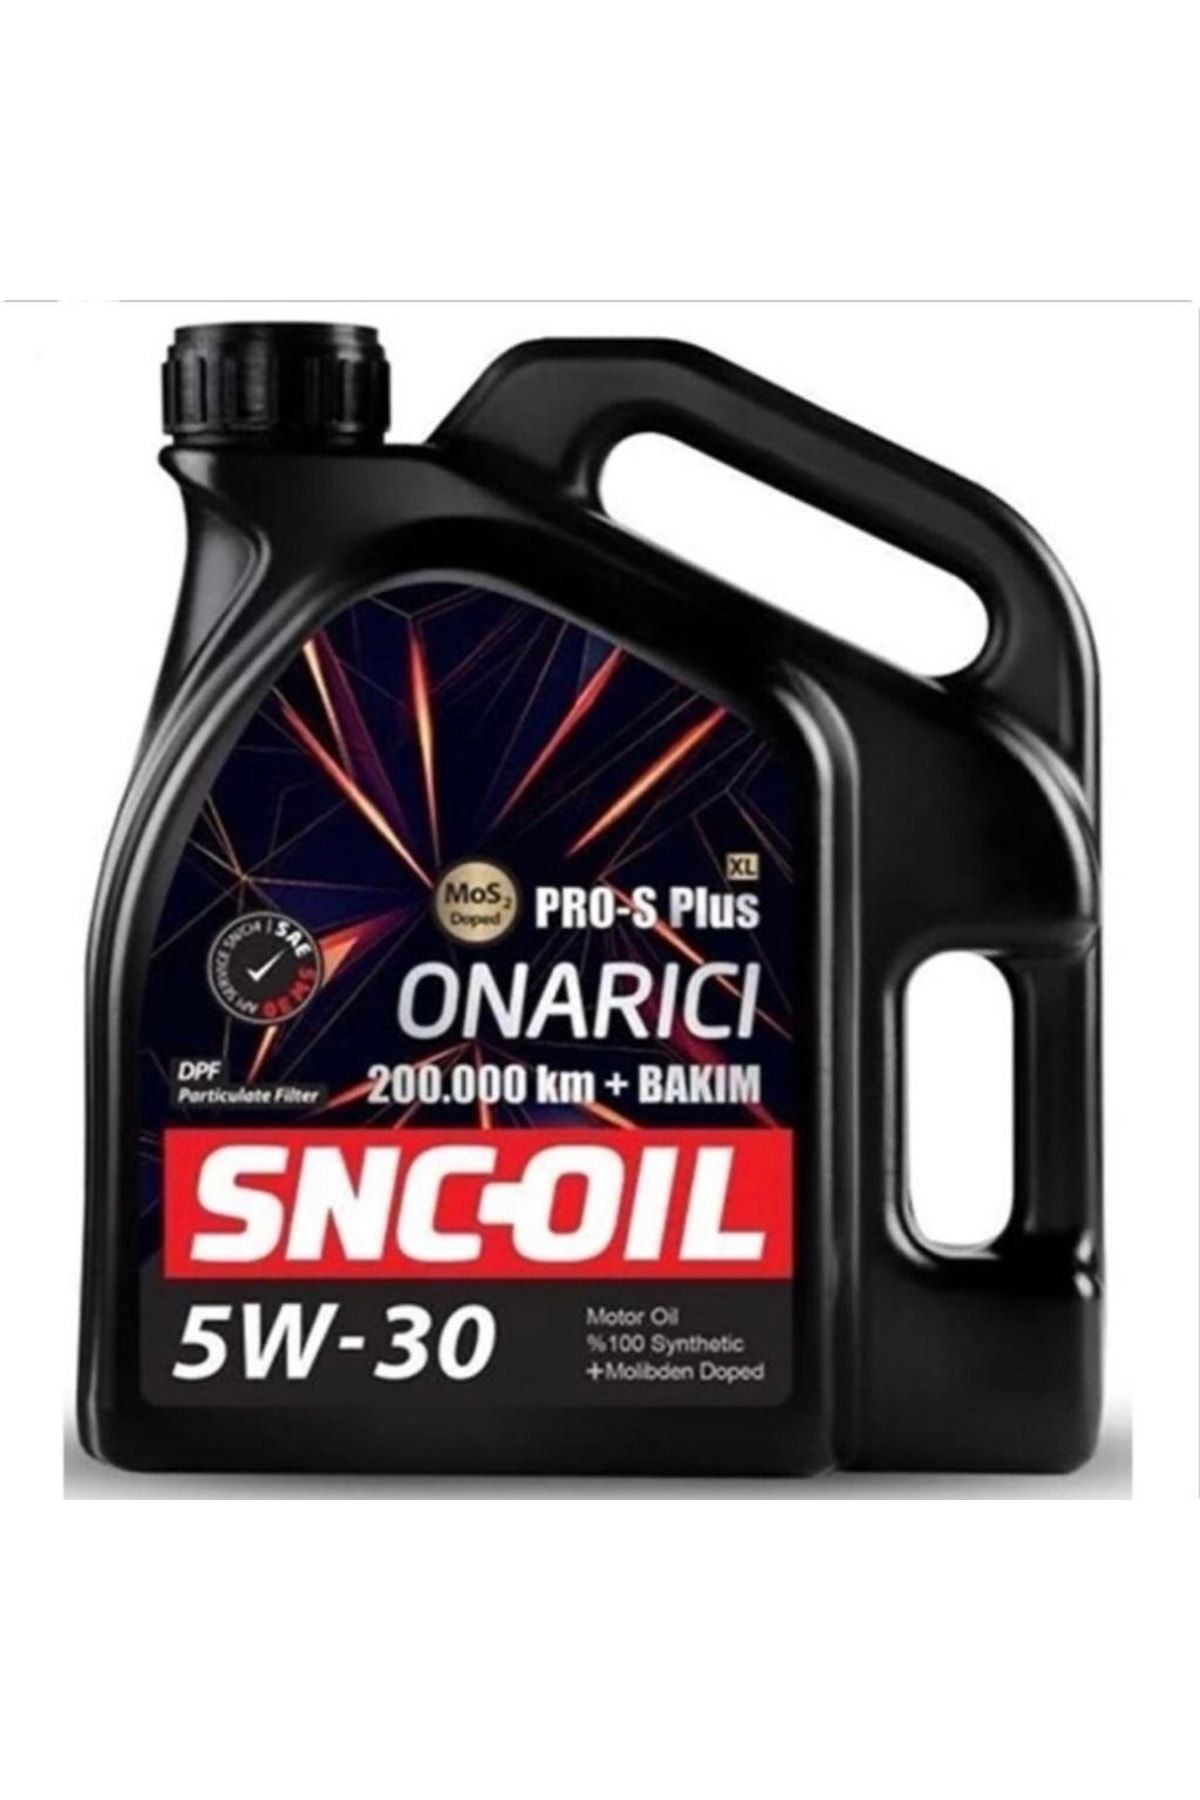 snc Oil 200.000km + Bakım Pro-s Plus Xl Onarıcı 5w-30 (4litre)